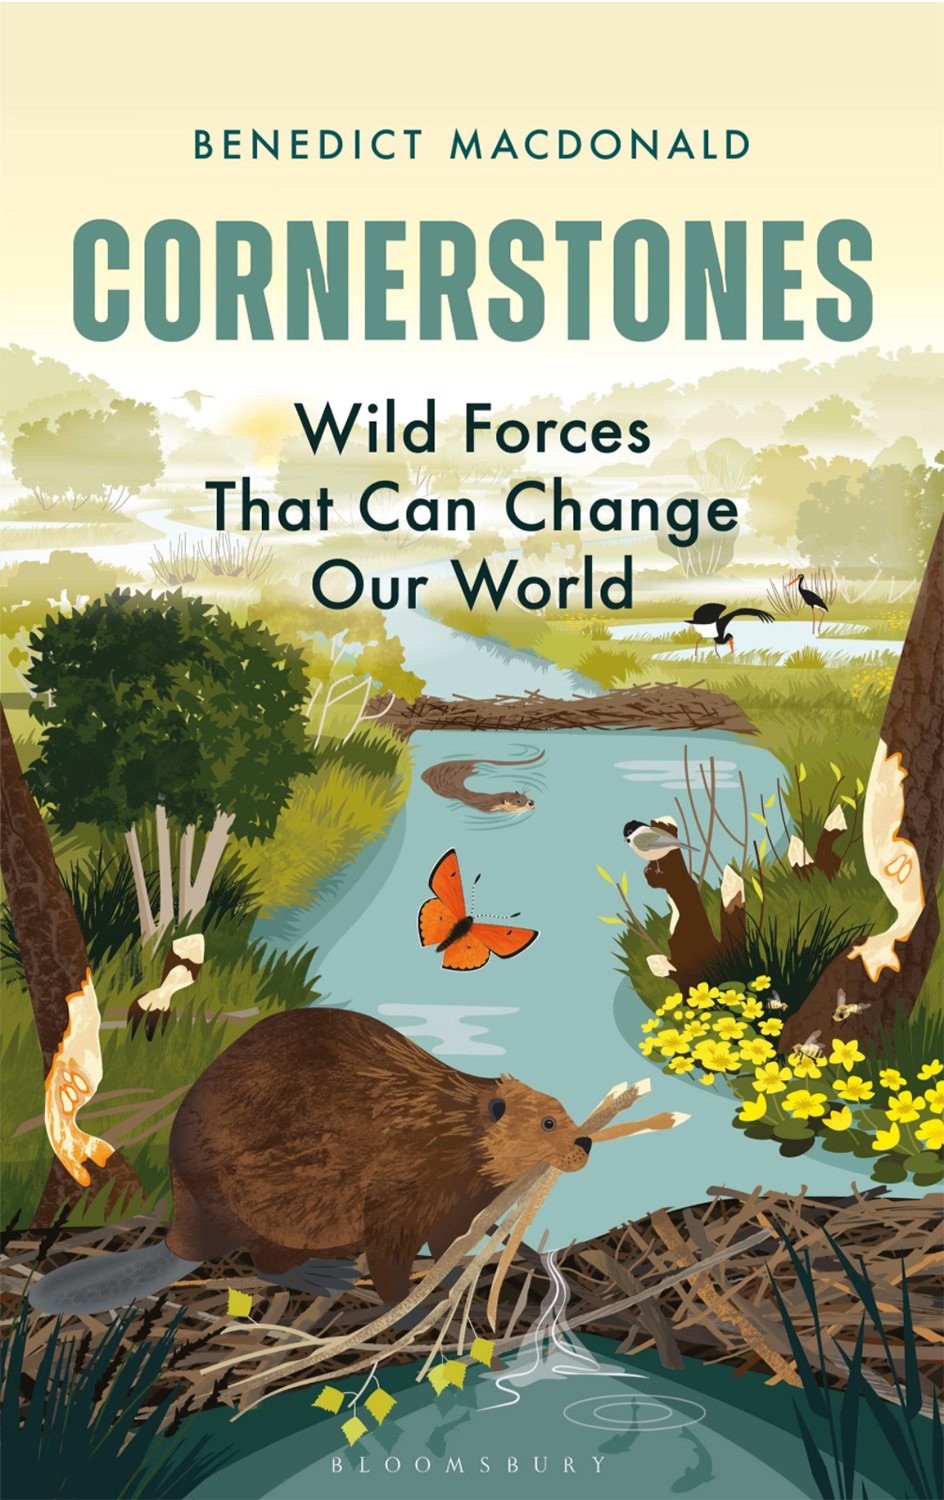 Rachel-Hudson-Illustration-children-books-editorial-maps-greetings-cards-wildlife-nature-animals-cover-art-Cornerstone-by-Bloomsbury.jpg